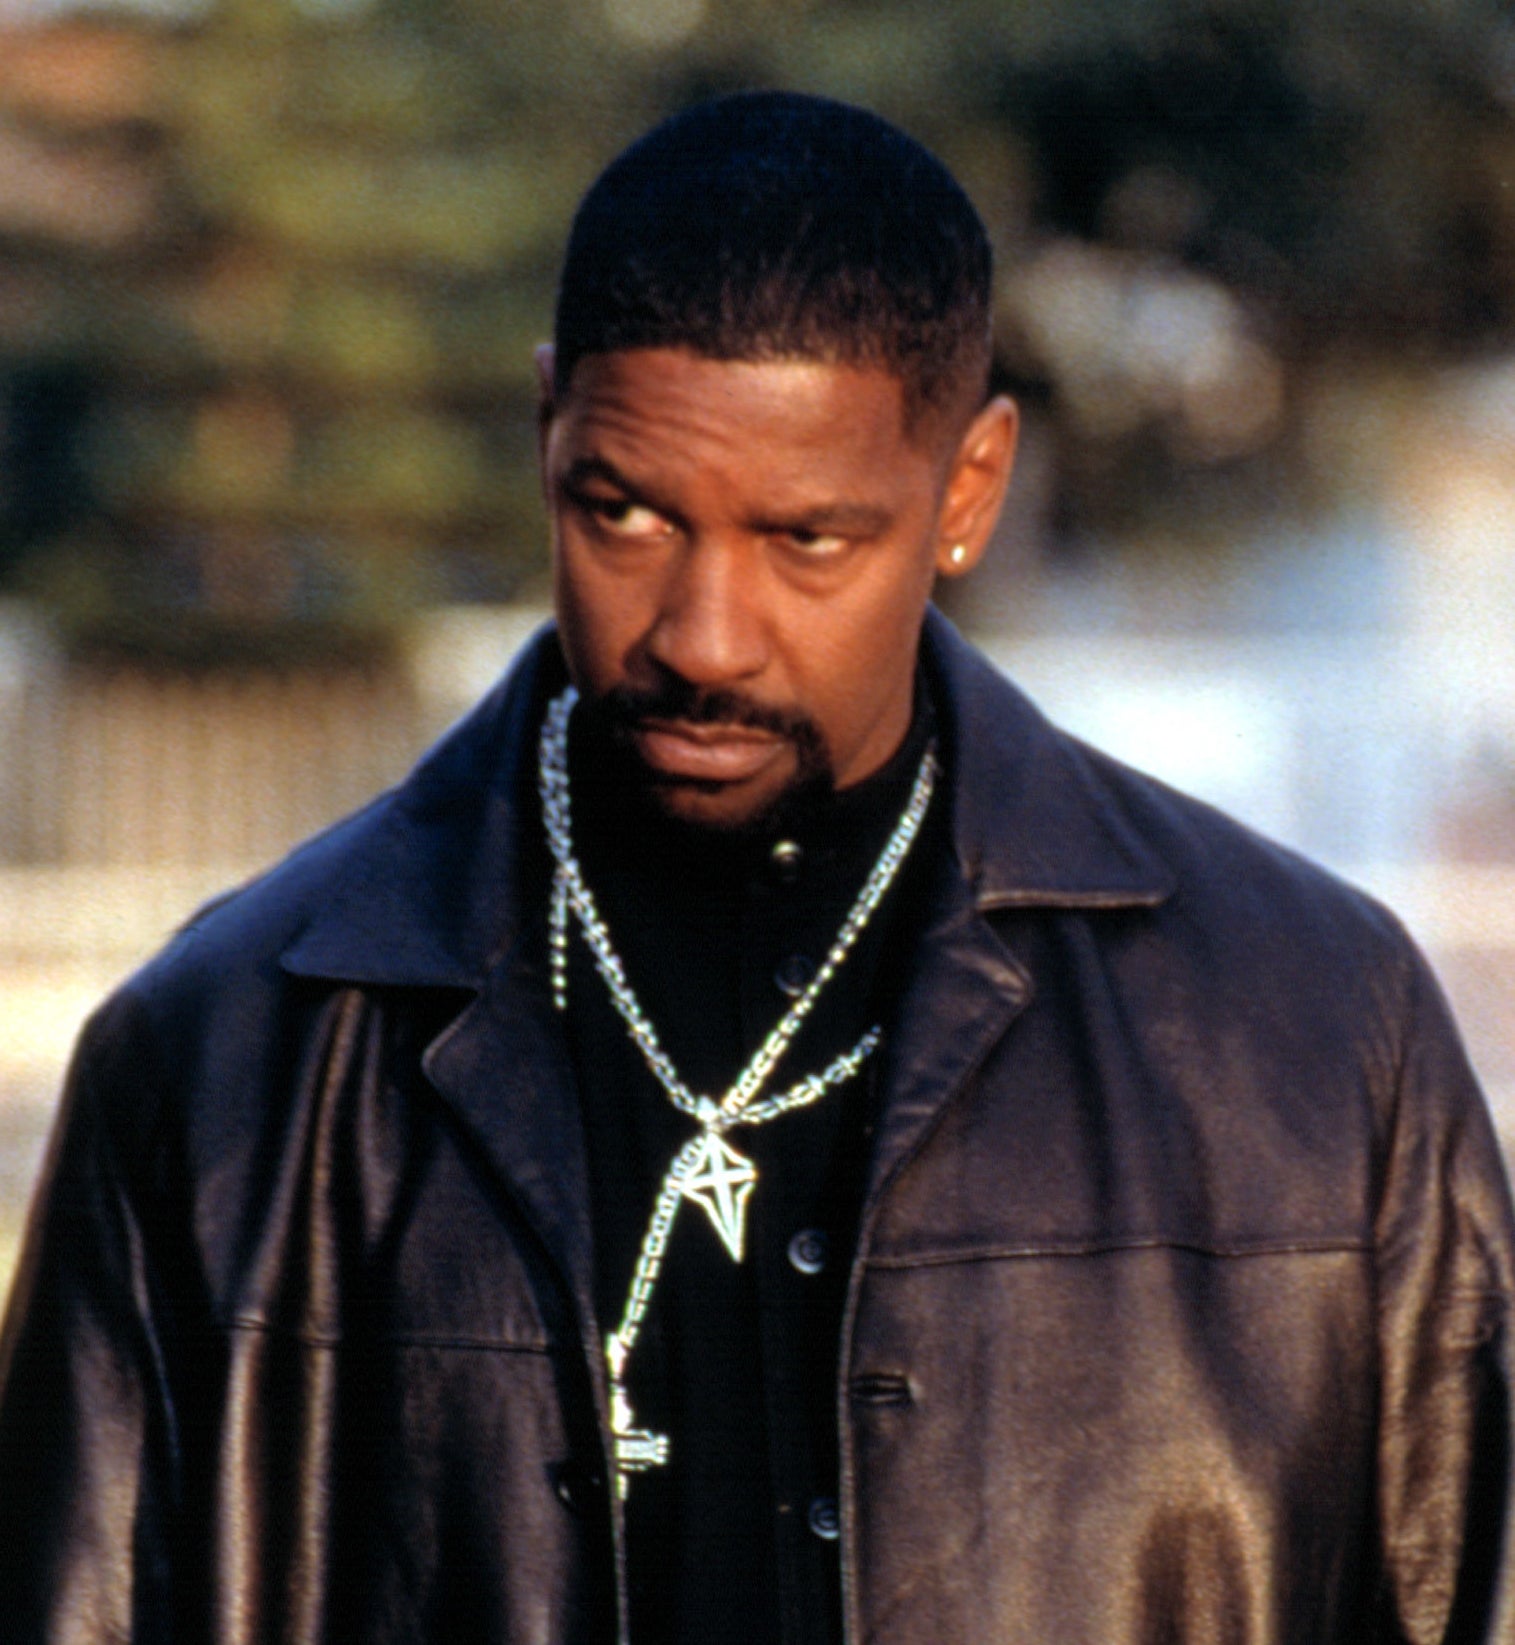 Denzel Washington as Alonzo Harris, wearing all black, including a leather jacket